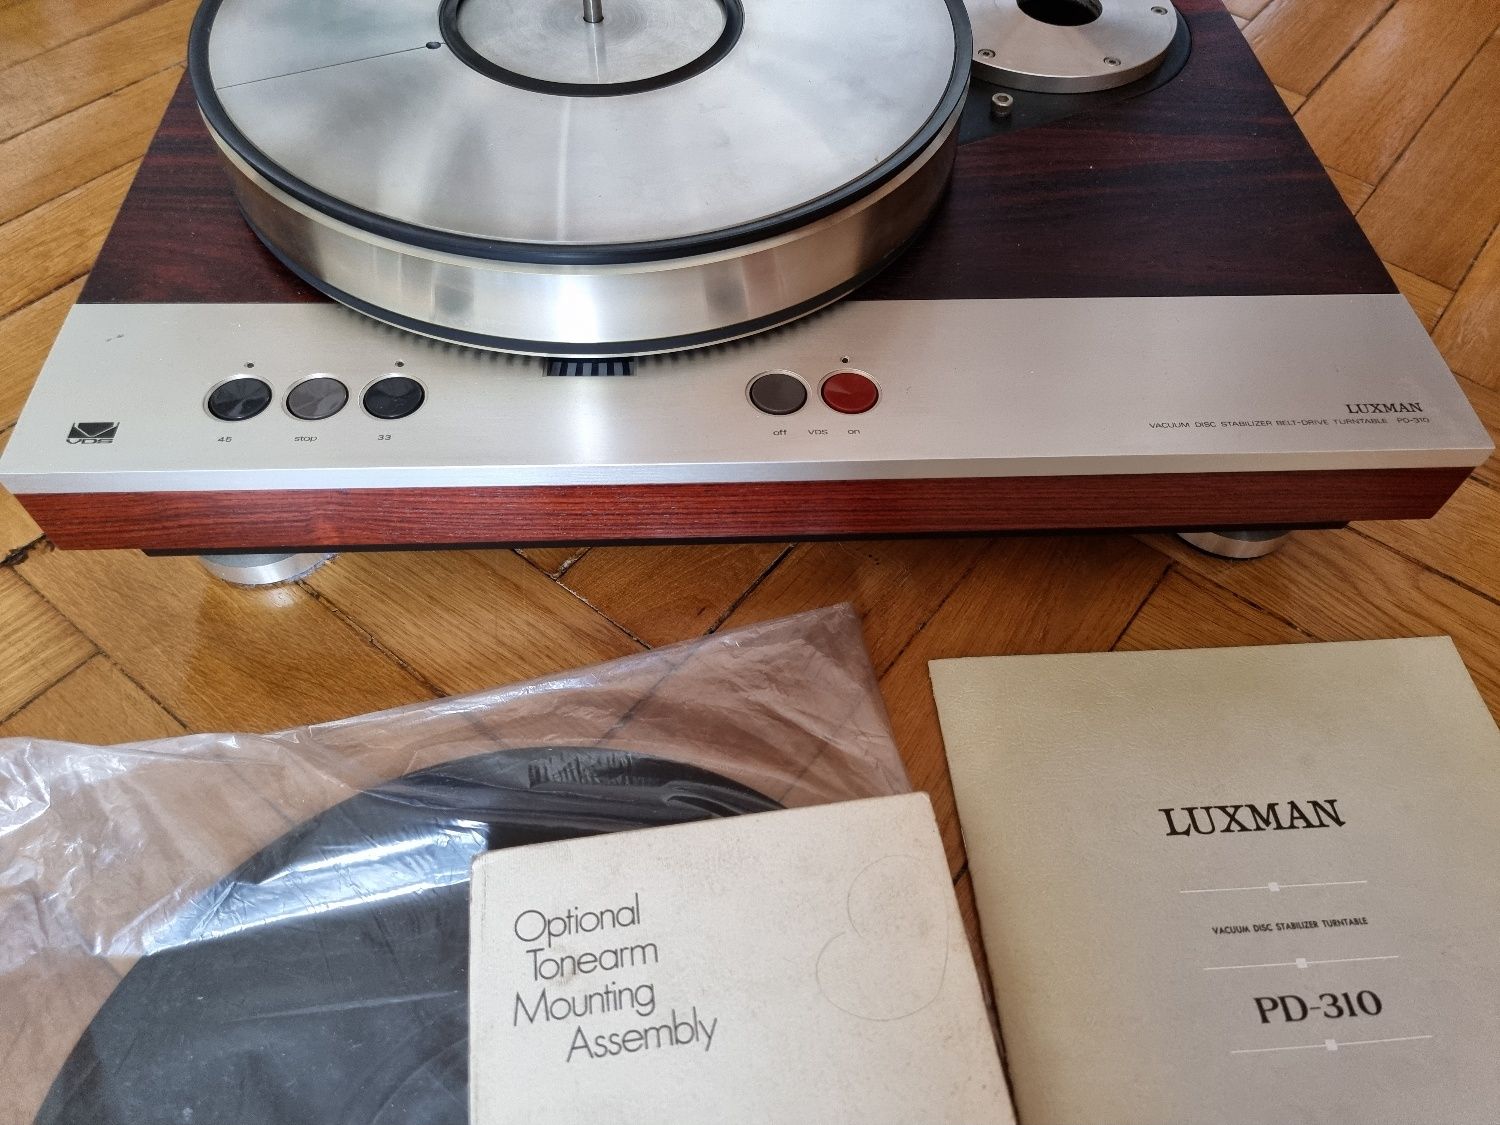 Gramofon Luxman PD-310, VS-300